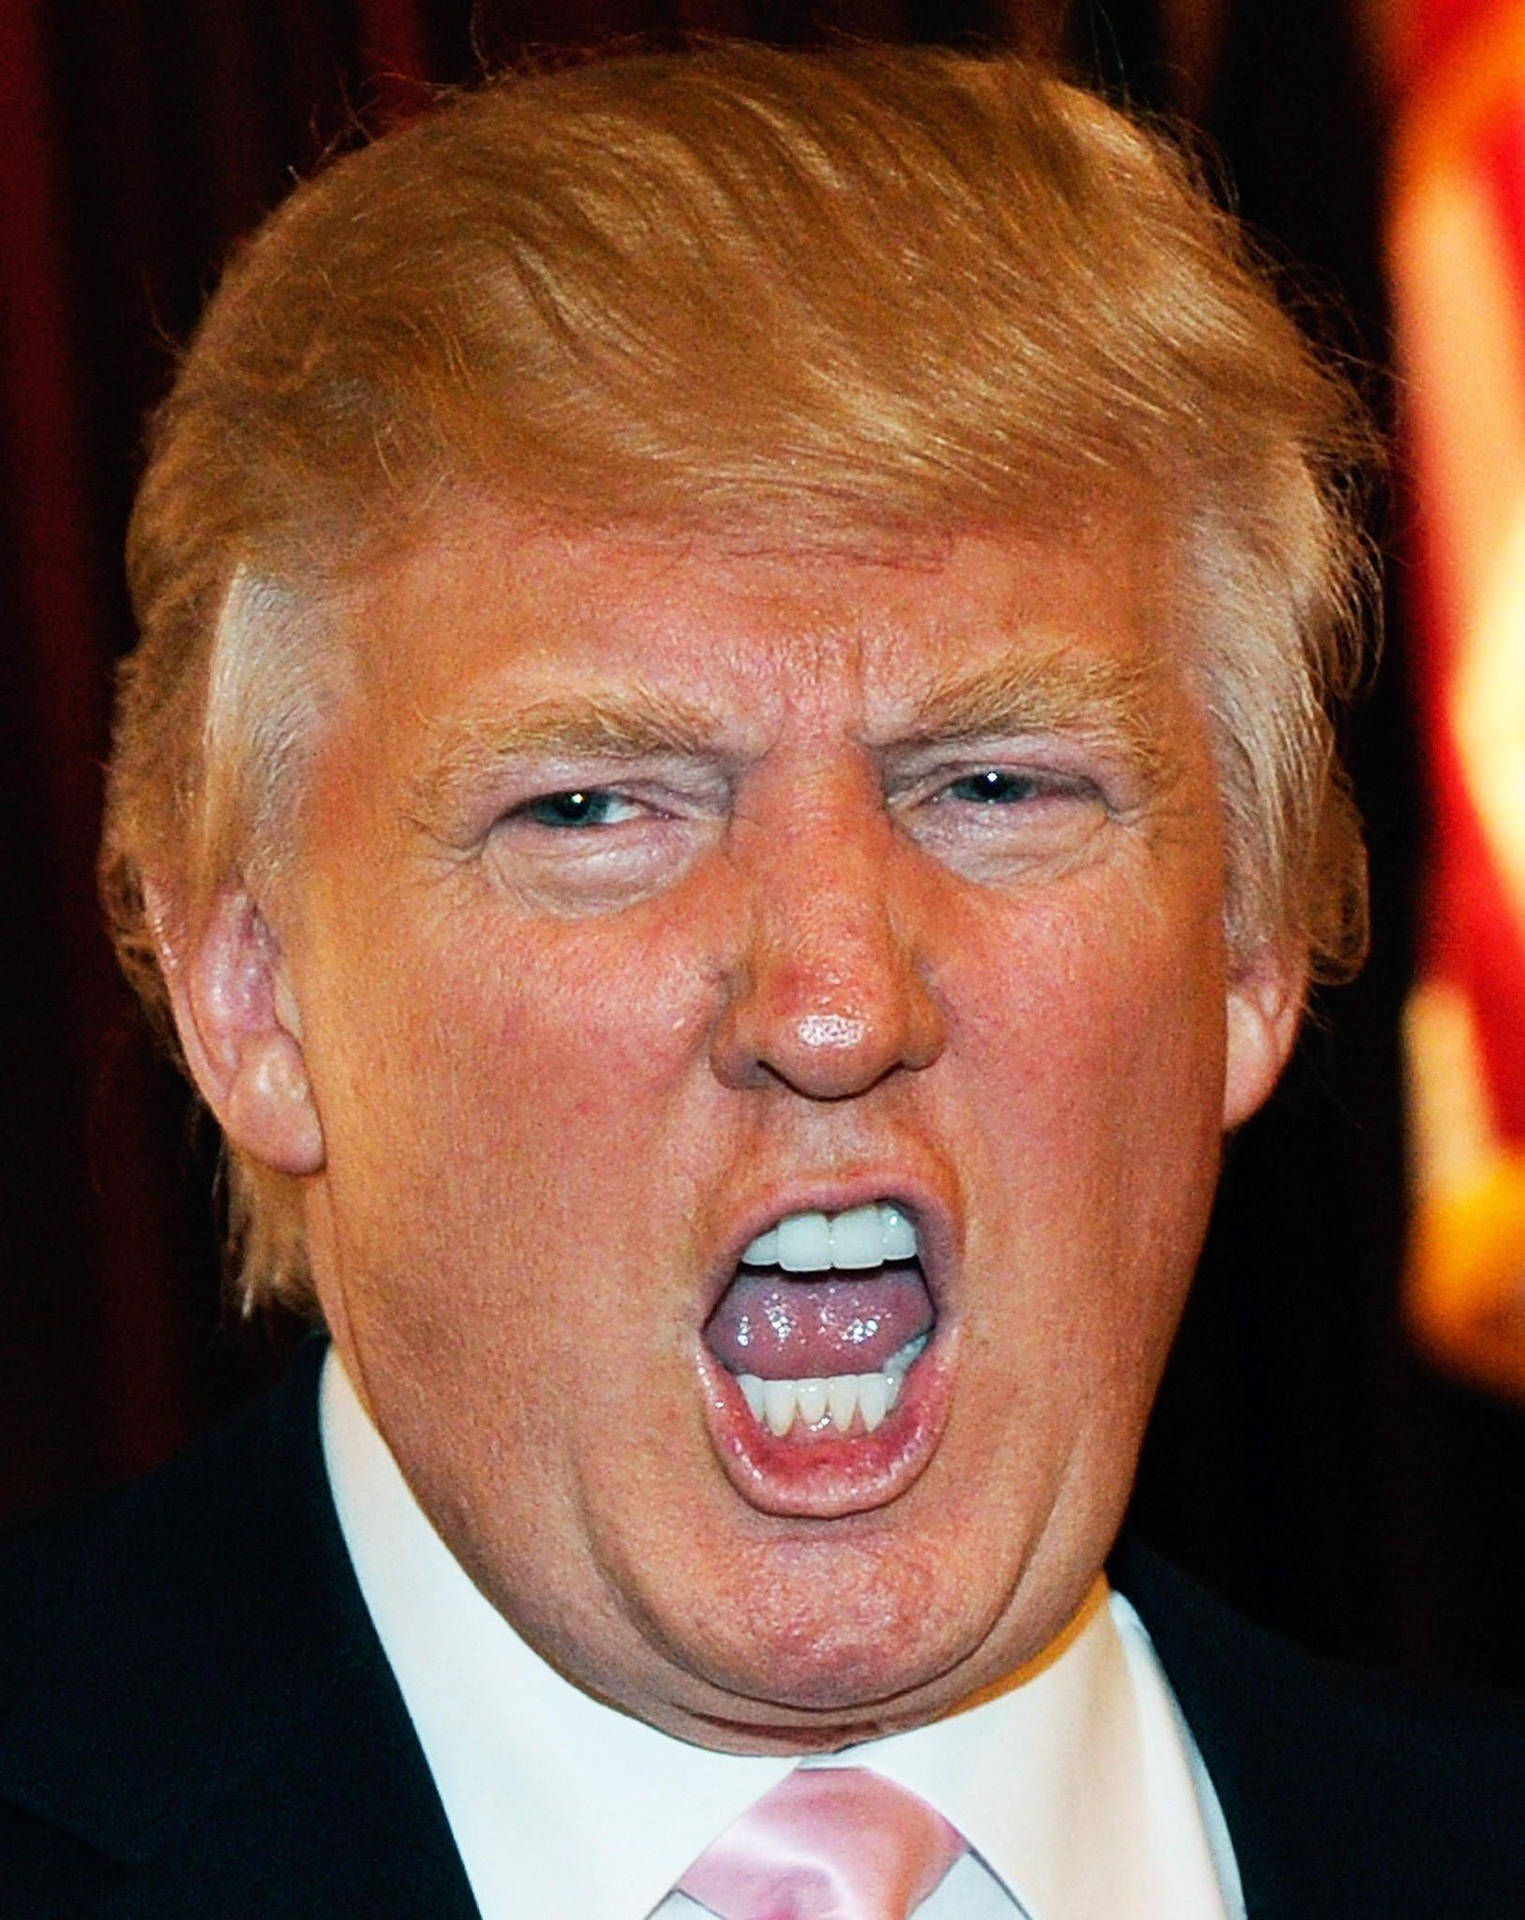 Donald Trump Angrily Yelling Wallpaper